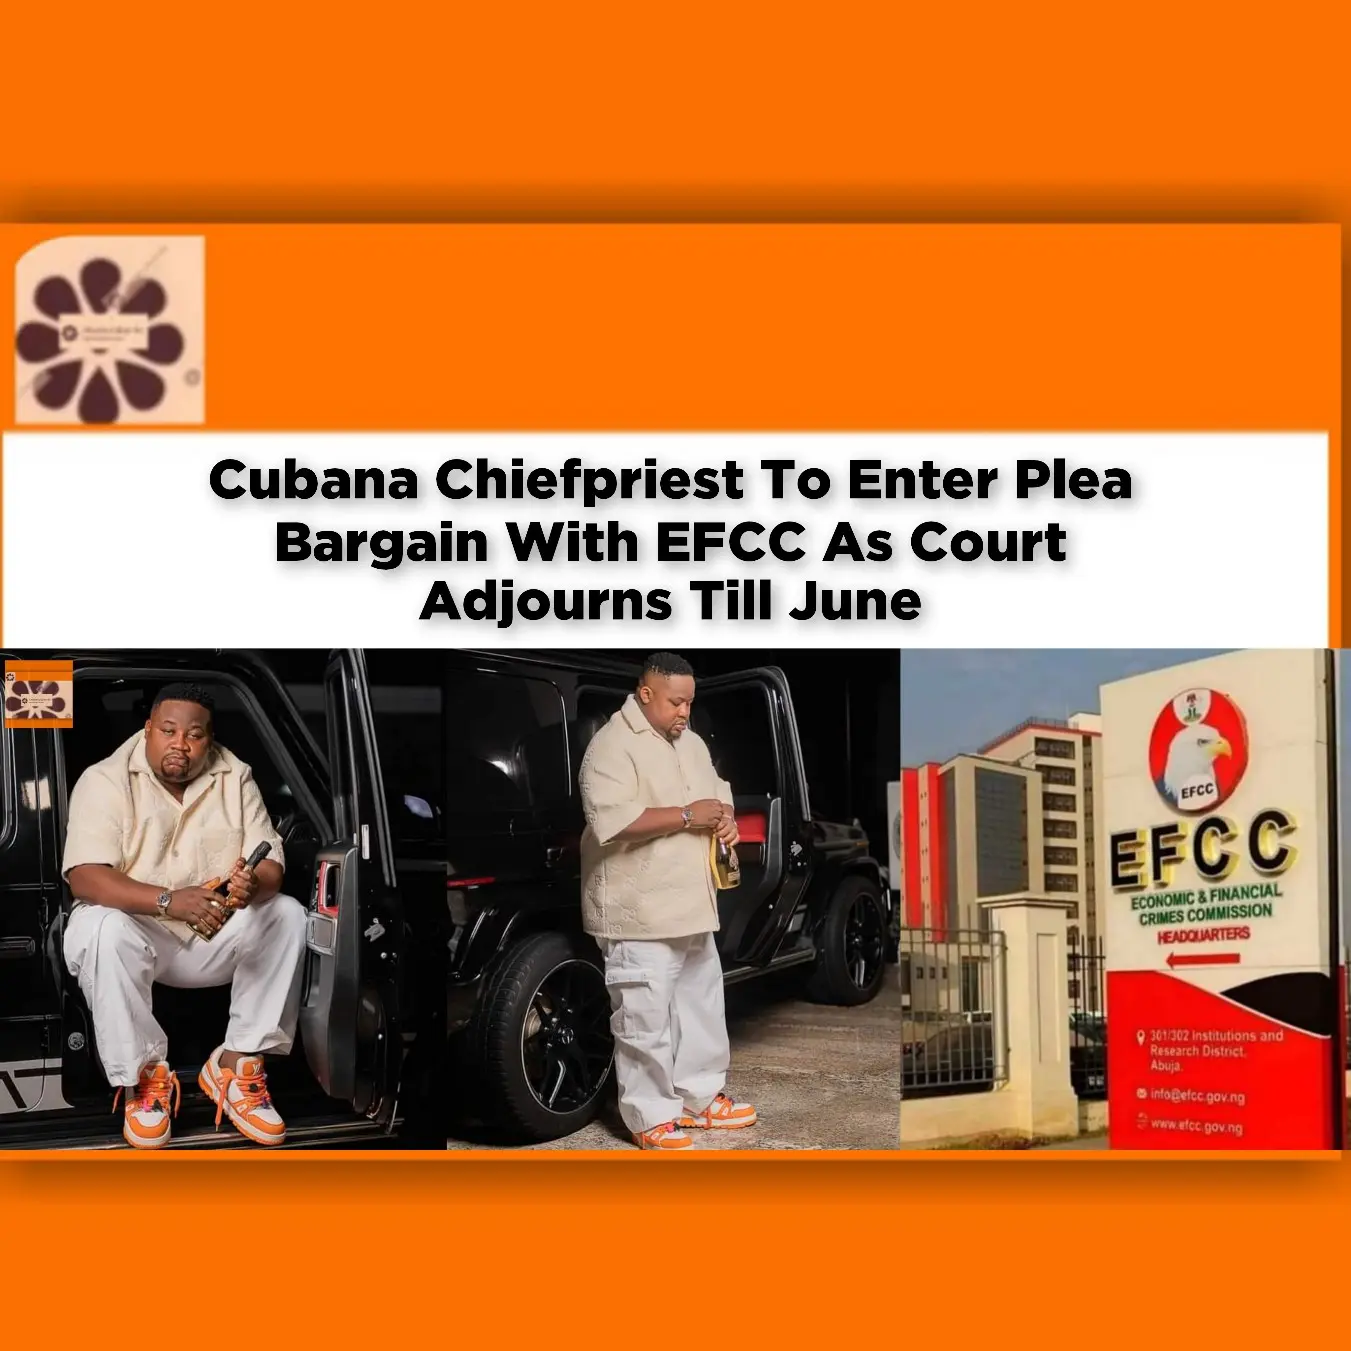 Cubana Chiefpriest To Enter Plea Bargain With EFCC As Court Adjourns Till June ~ OsazuwaAkonedo #Ubah